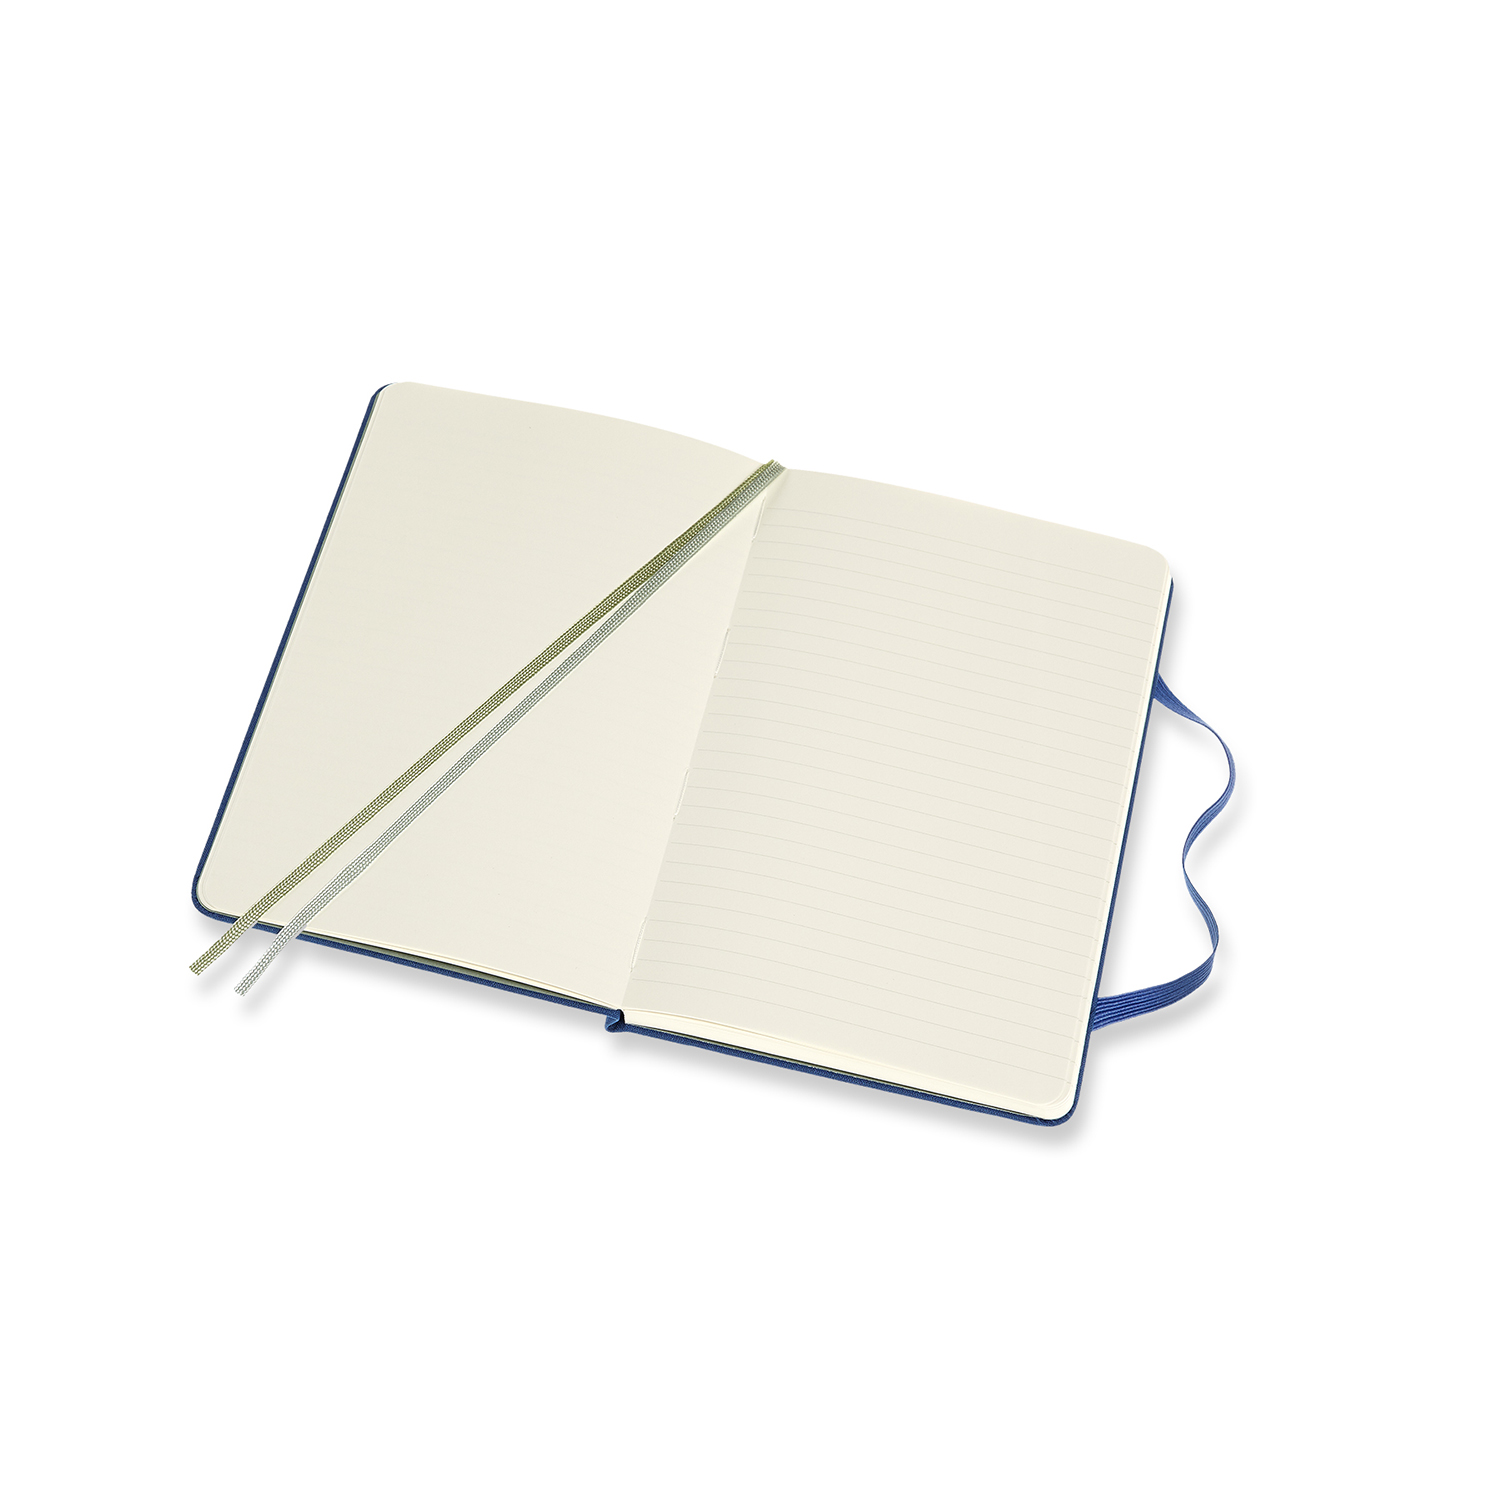 Two-go notebook black medium plain and ruled lapis blue - alternative